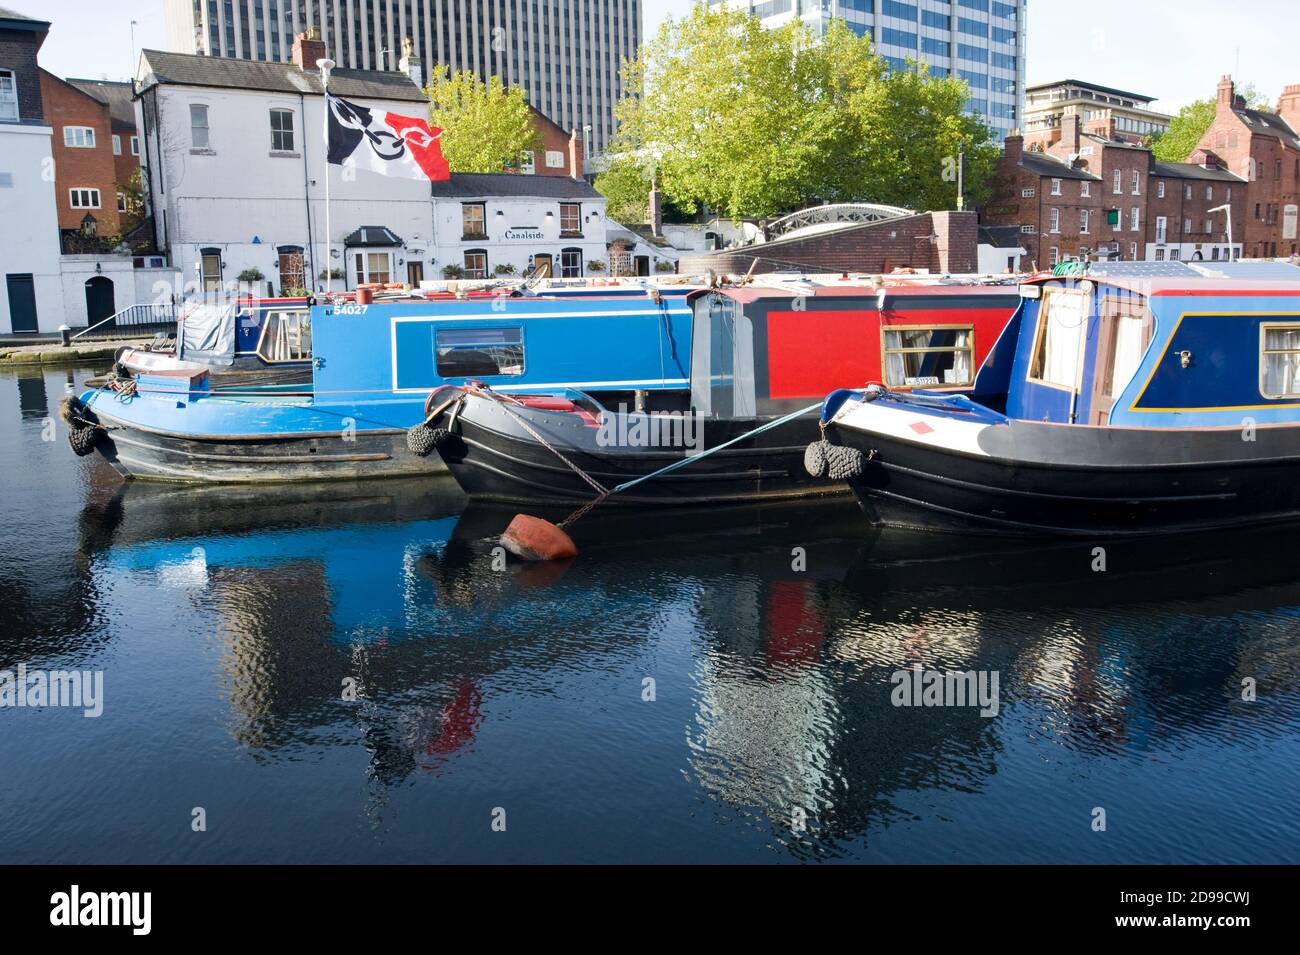 Narrowboats In Gas Street Basin Birmingham England UK Stock Photo